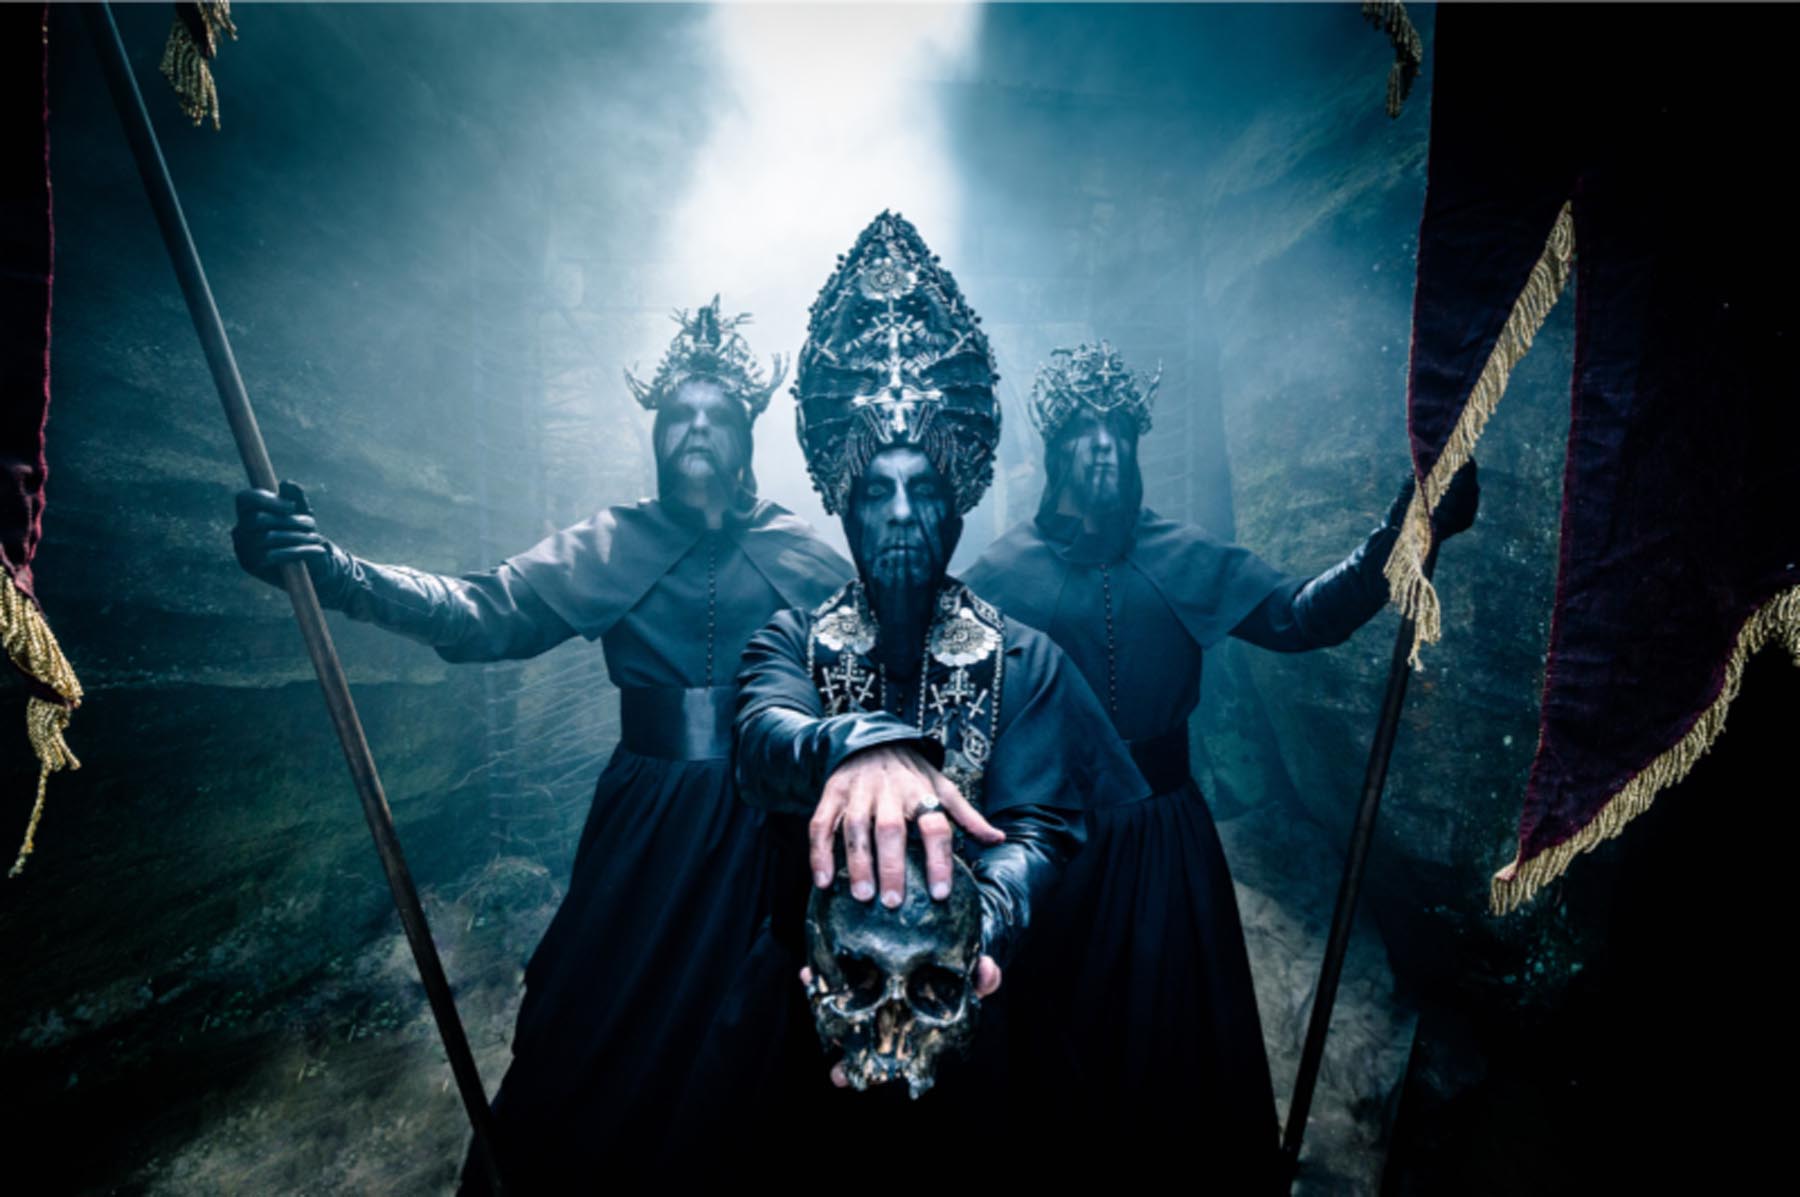 behemoth tour 2015